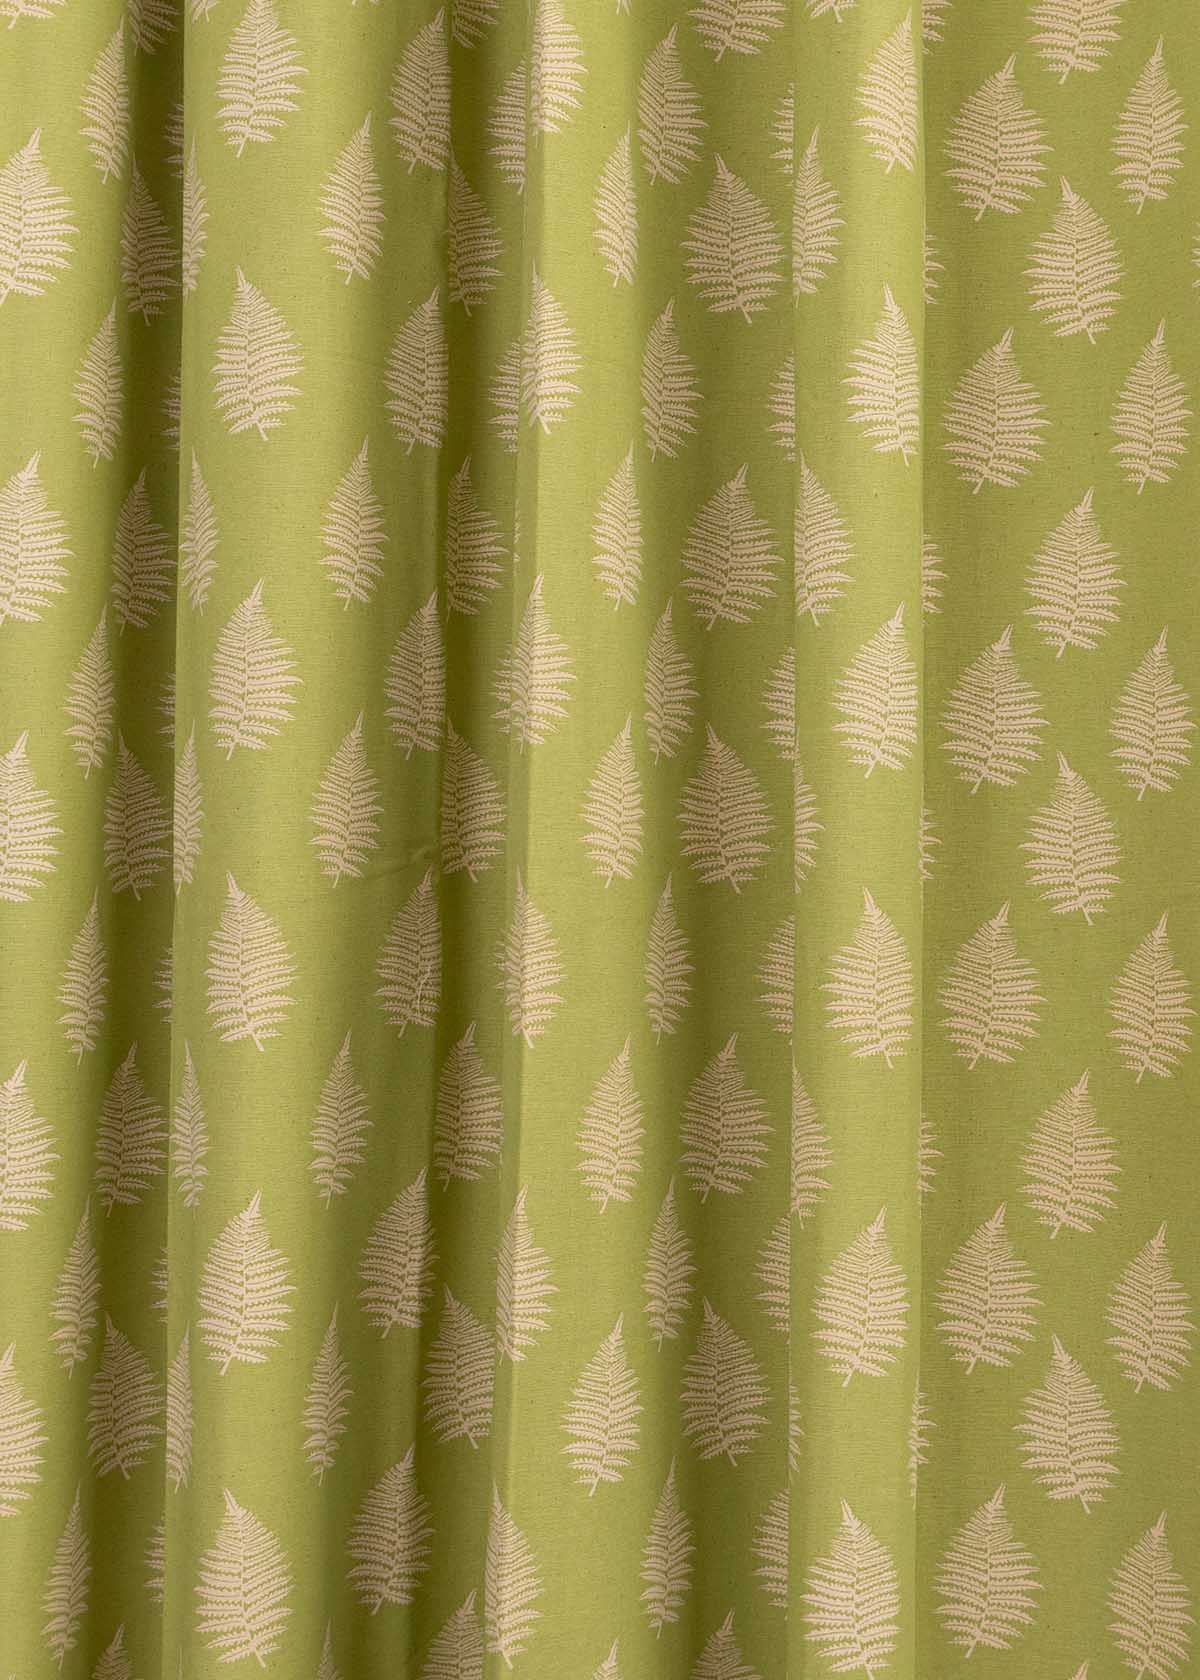 Ferns printed cotton Fabric - Green